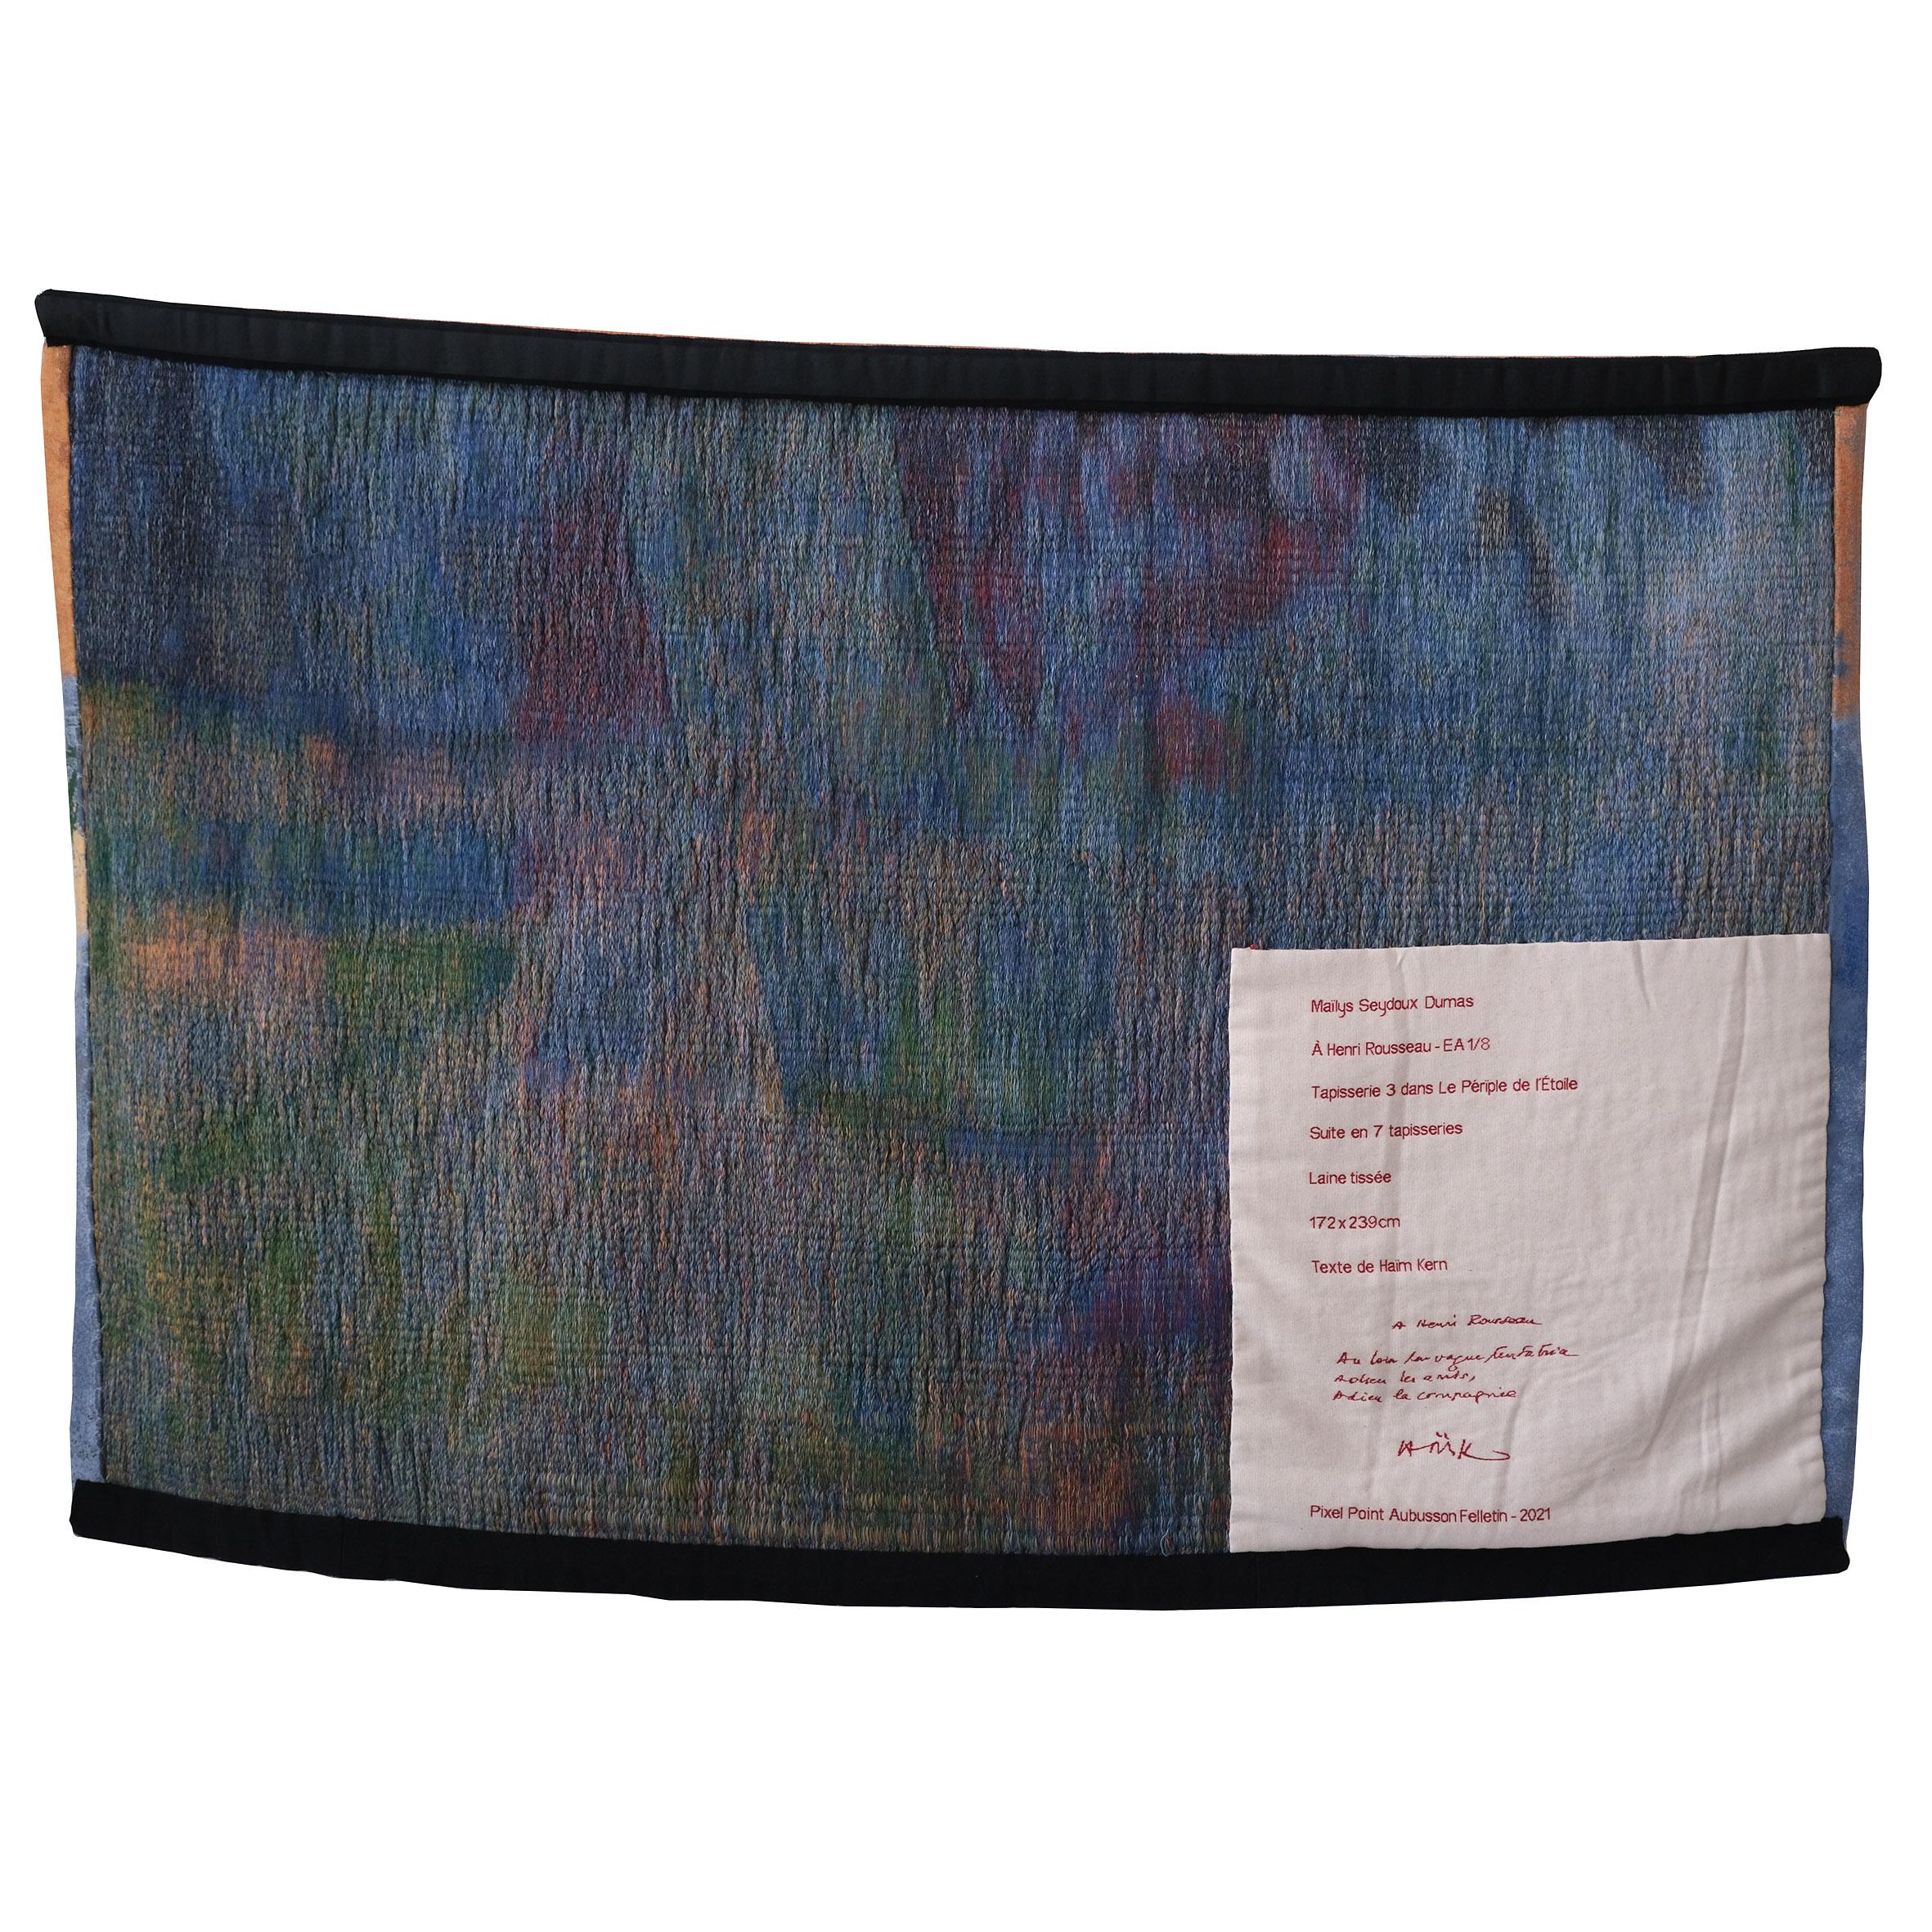 Woven Maïlys Seydoux-Dumas, To Henri Rousseau, Wool Tapestry, Néolice, 2021 For Sale